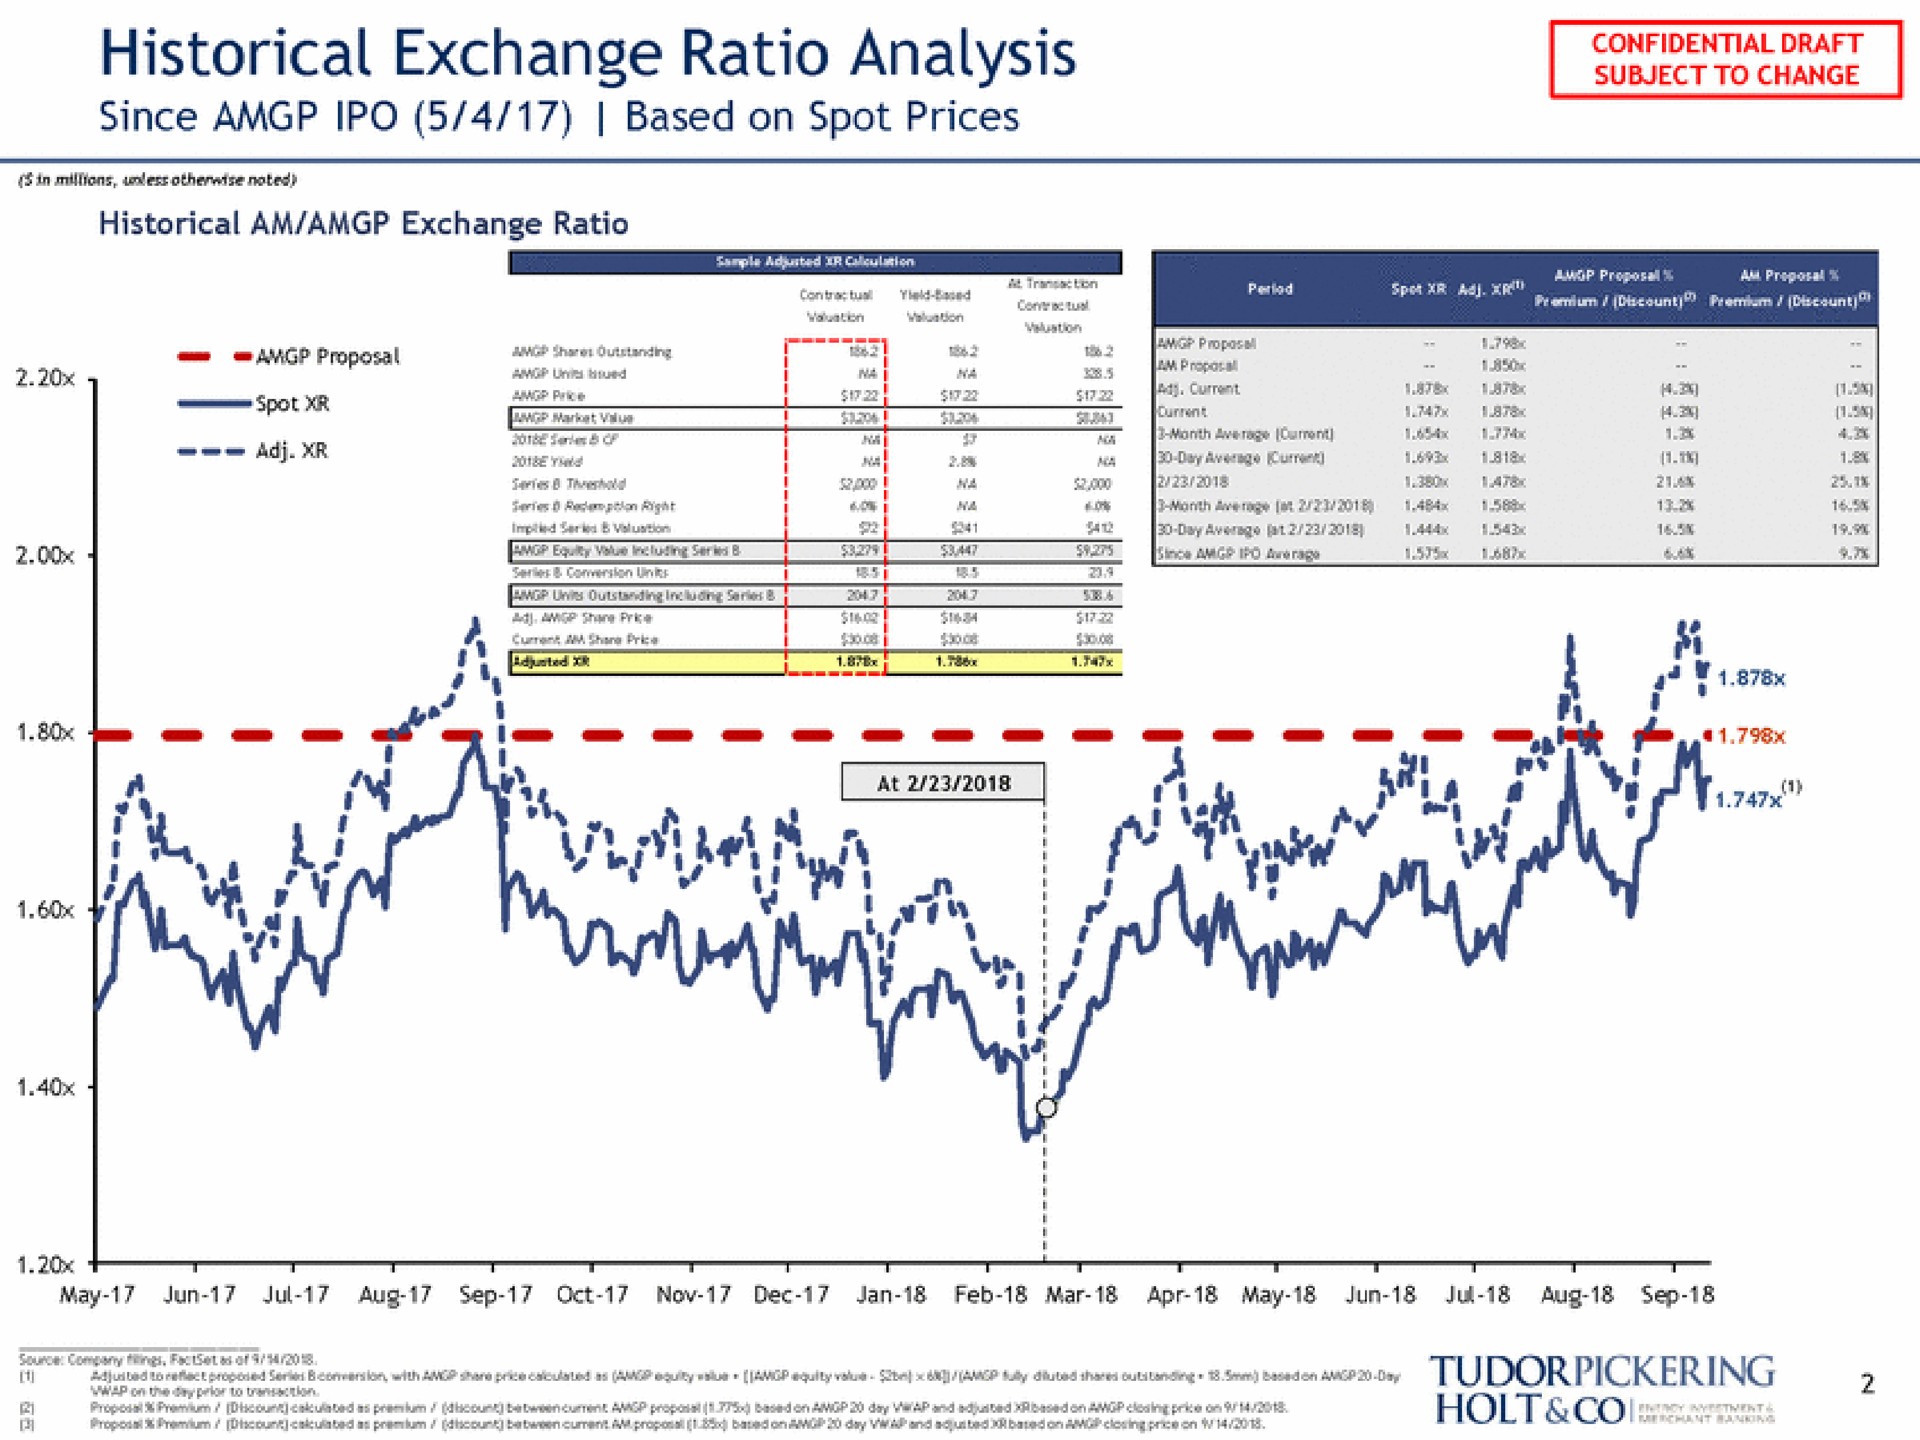 historical exchange ratio analysis i | Tudor, Pickering, Holt & Co